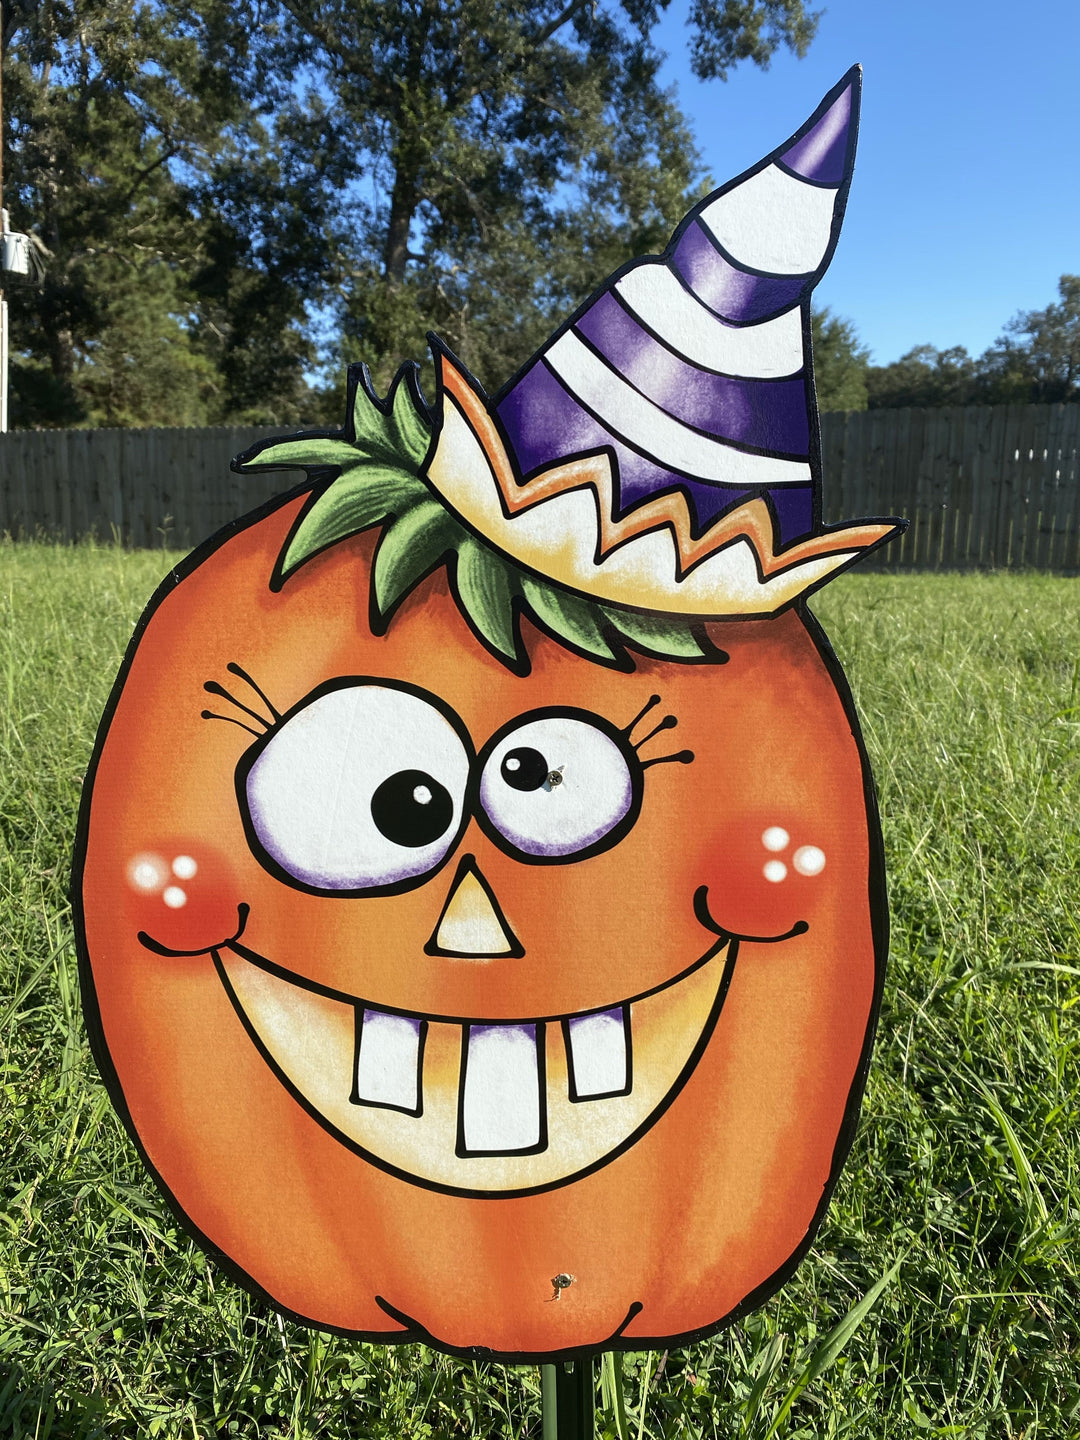 Smiling Pumpkin Crooked Hat Yard Art Decoration